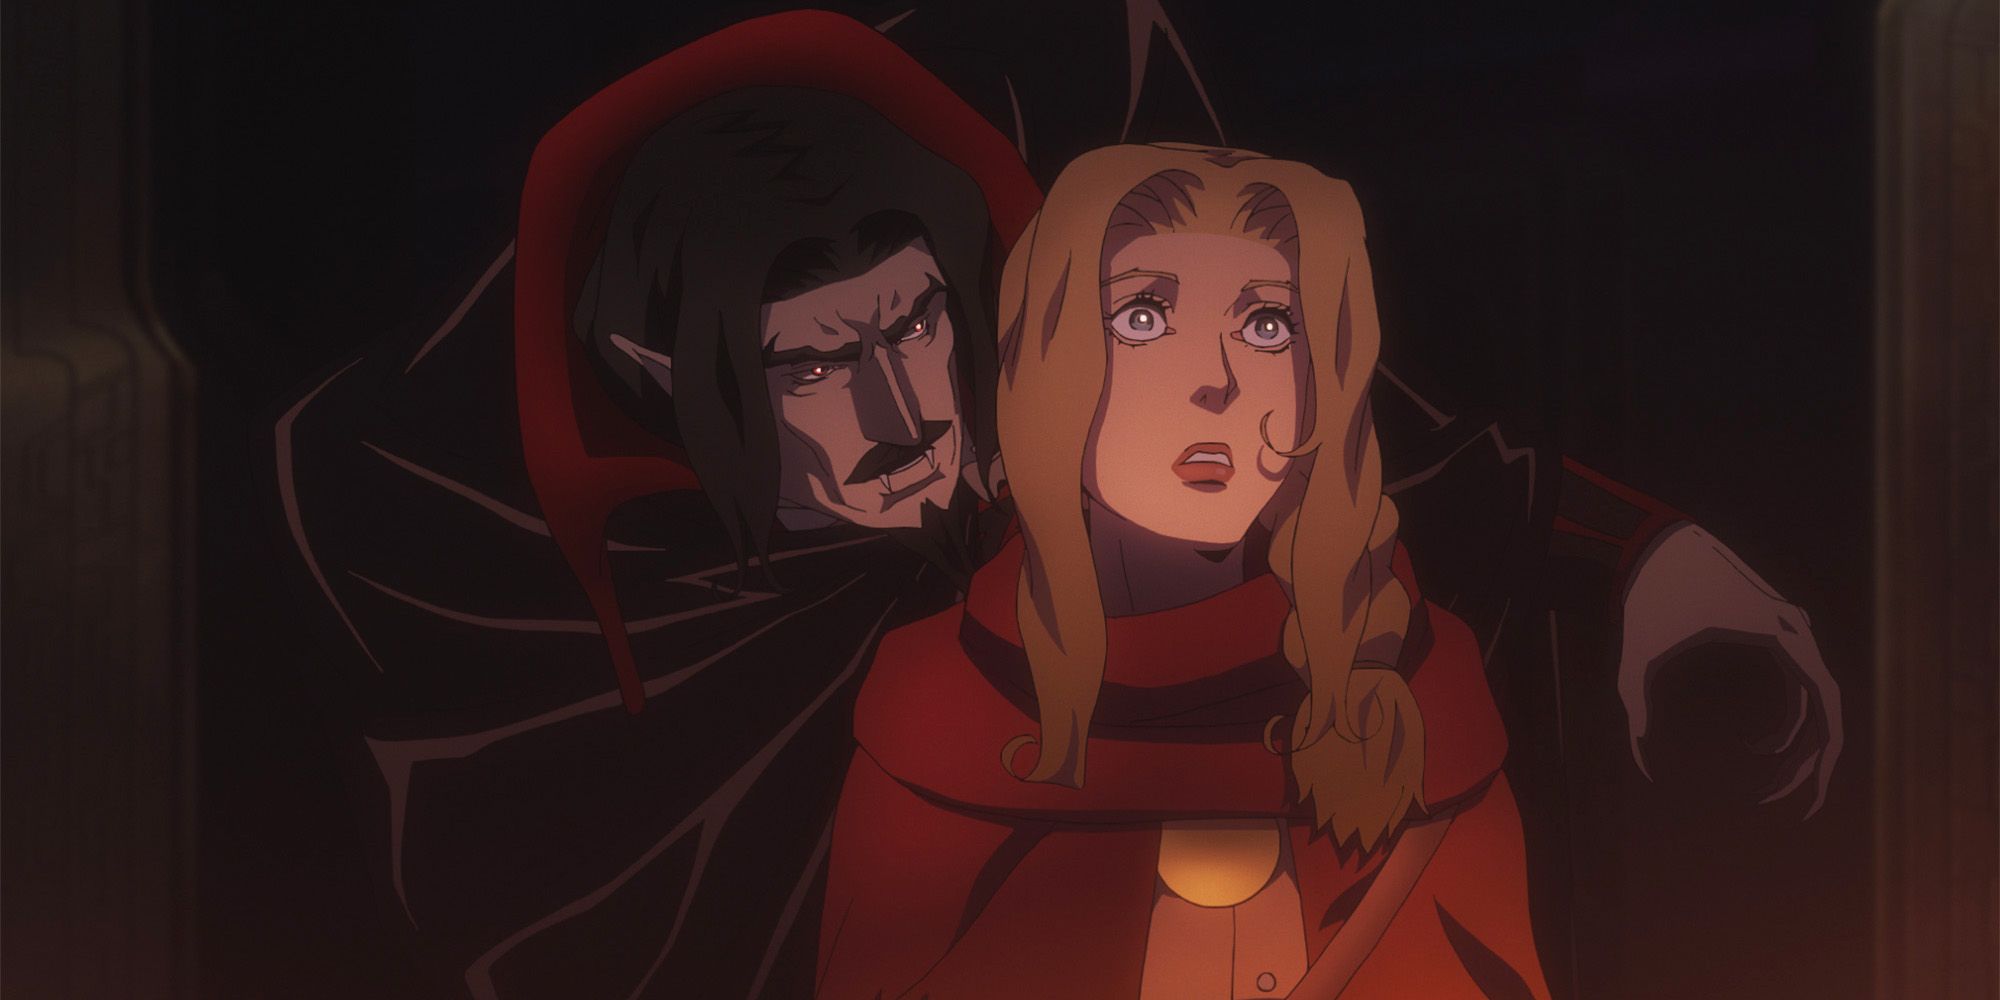 Lisa and Dracula together